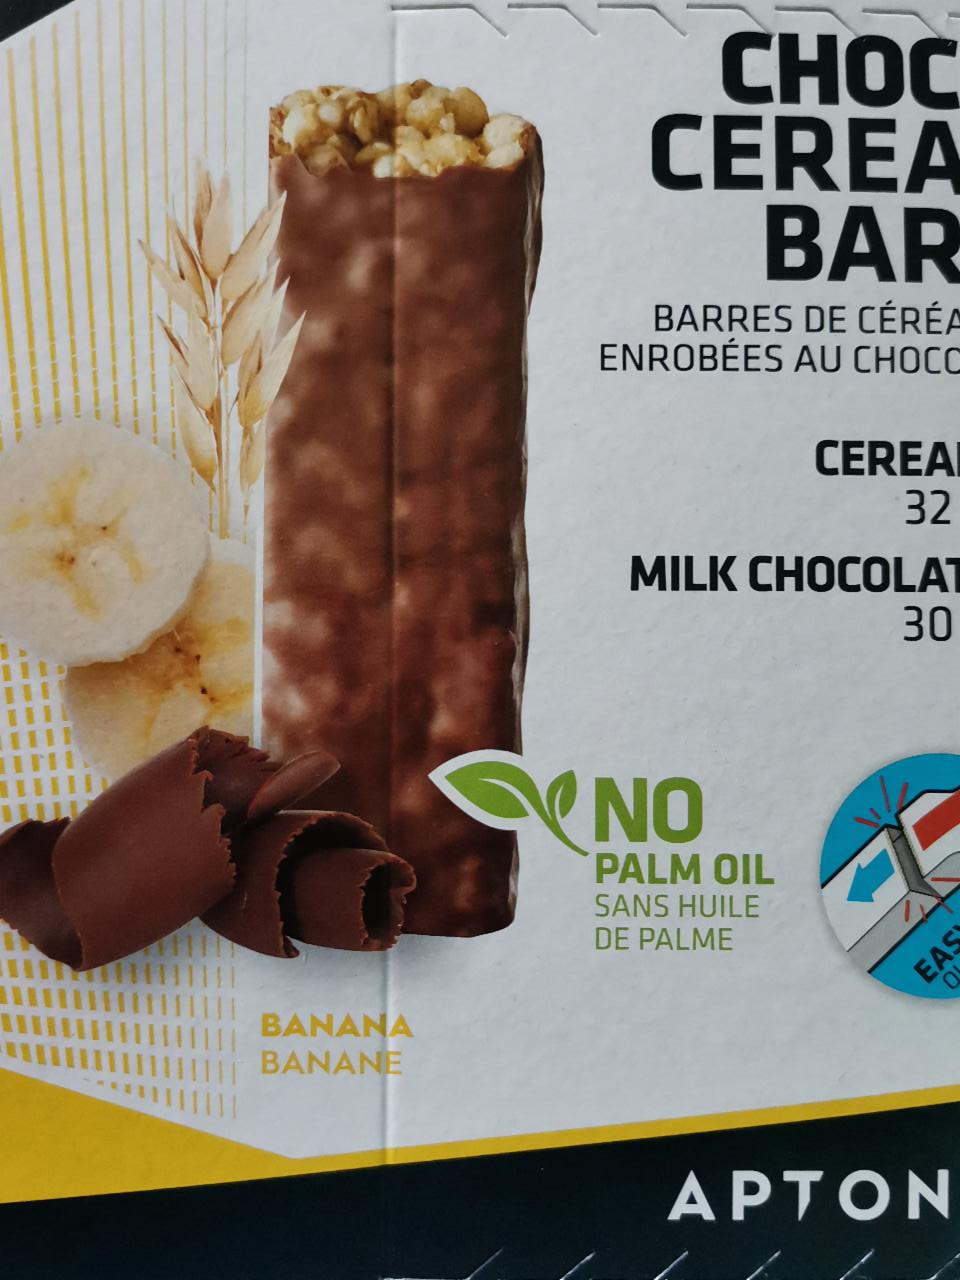 Képek - Choco cereal bars banana Aptonia